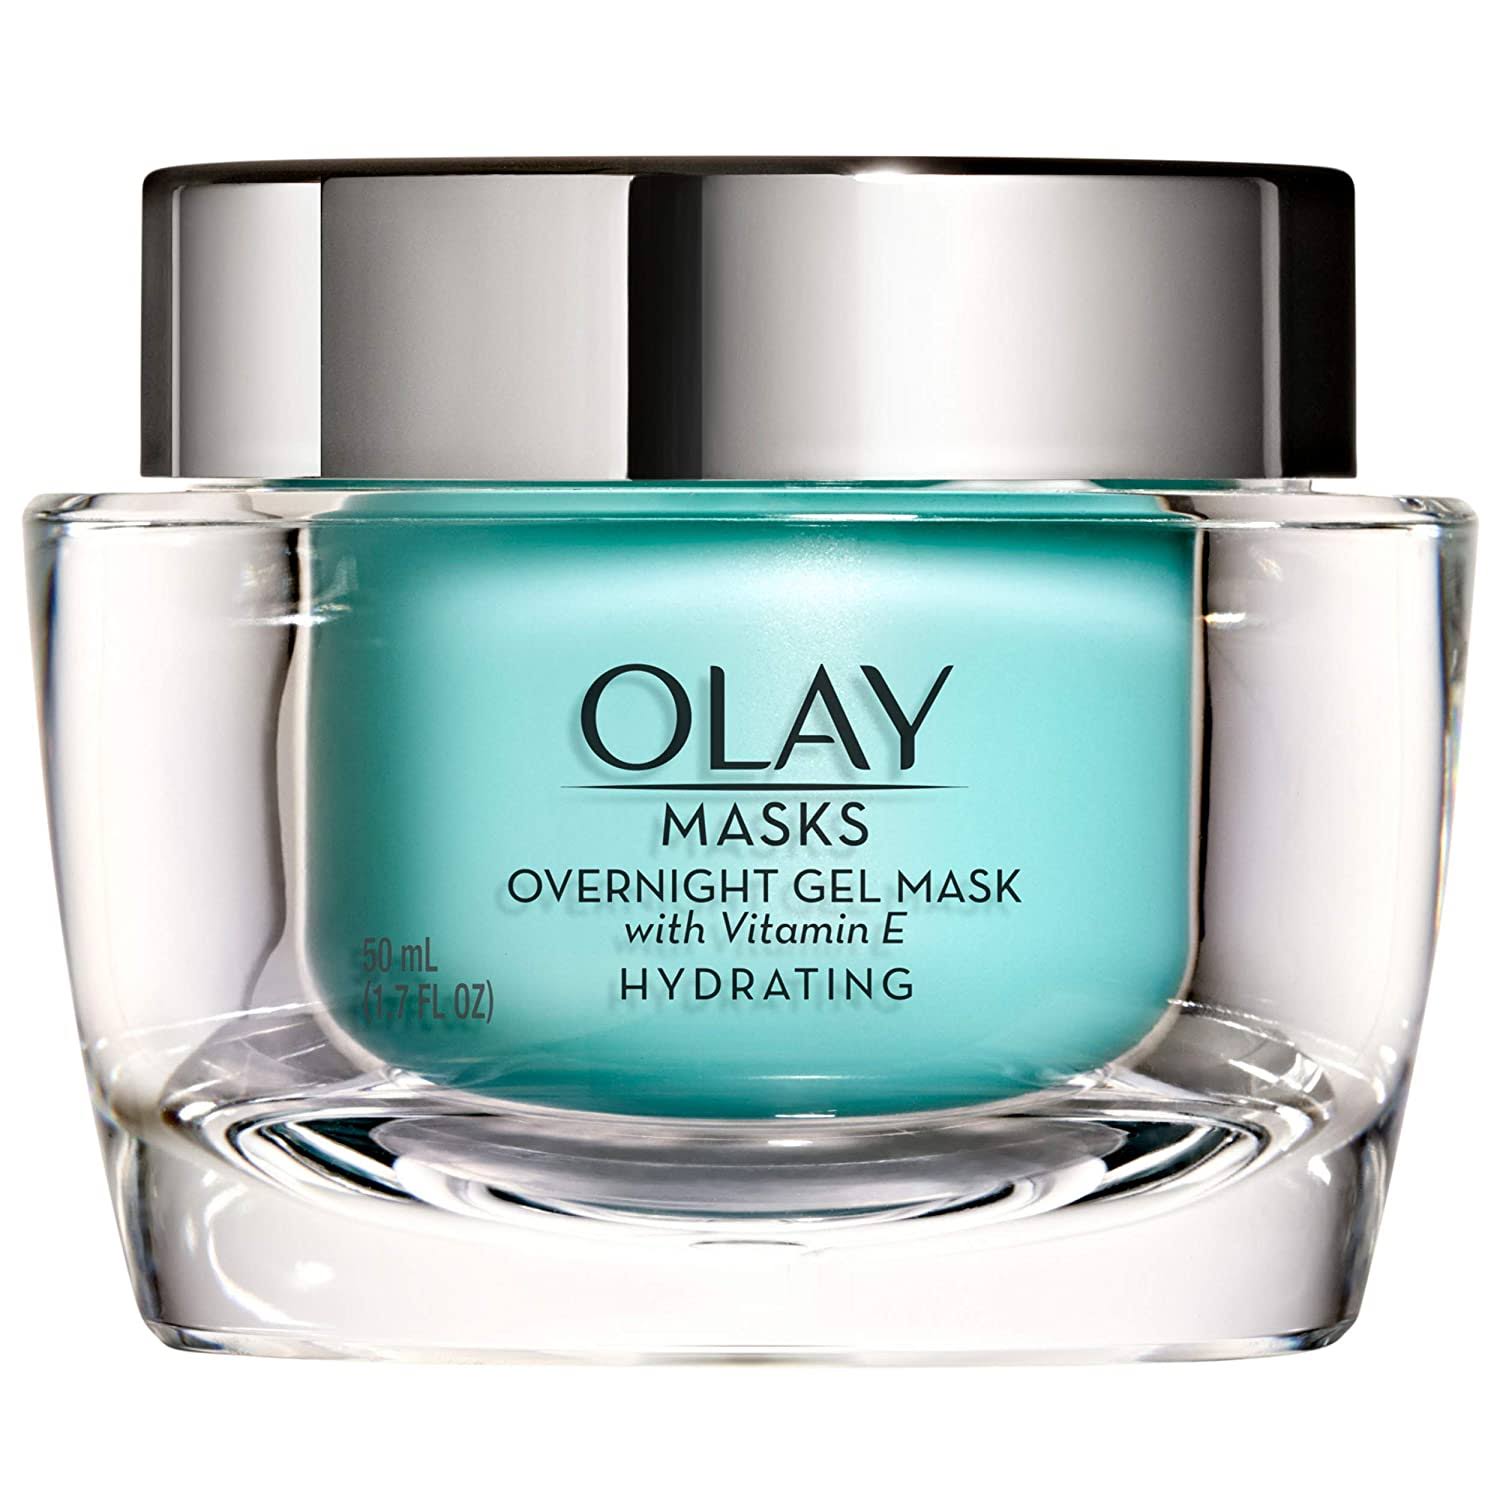 Olay Masks Hydrating Overnight Gel Mask - 50ml